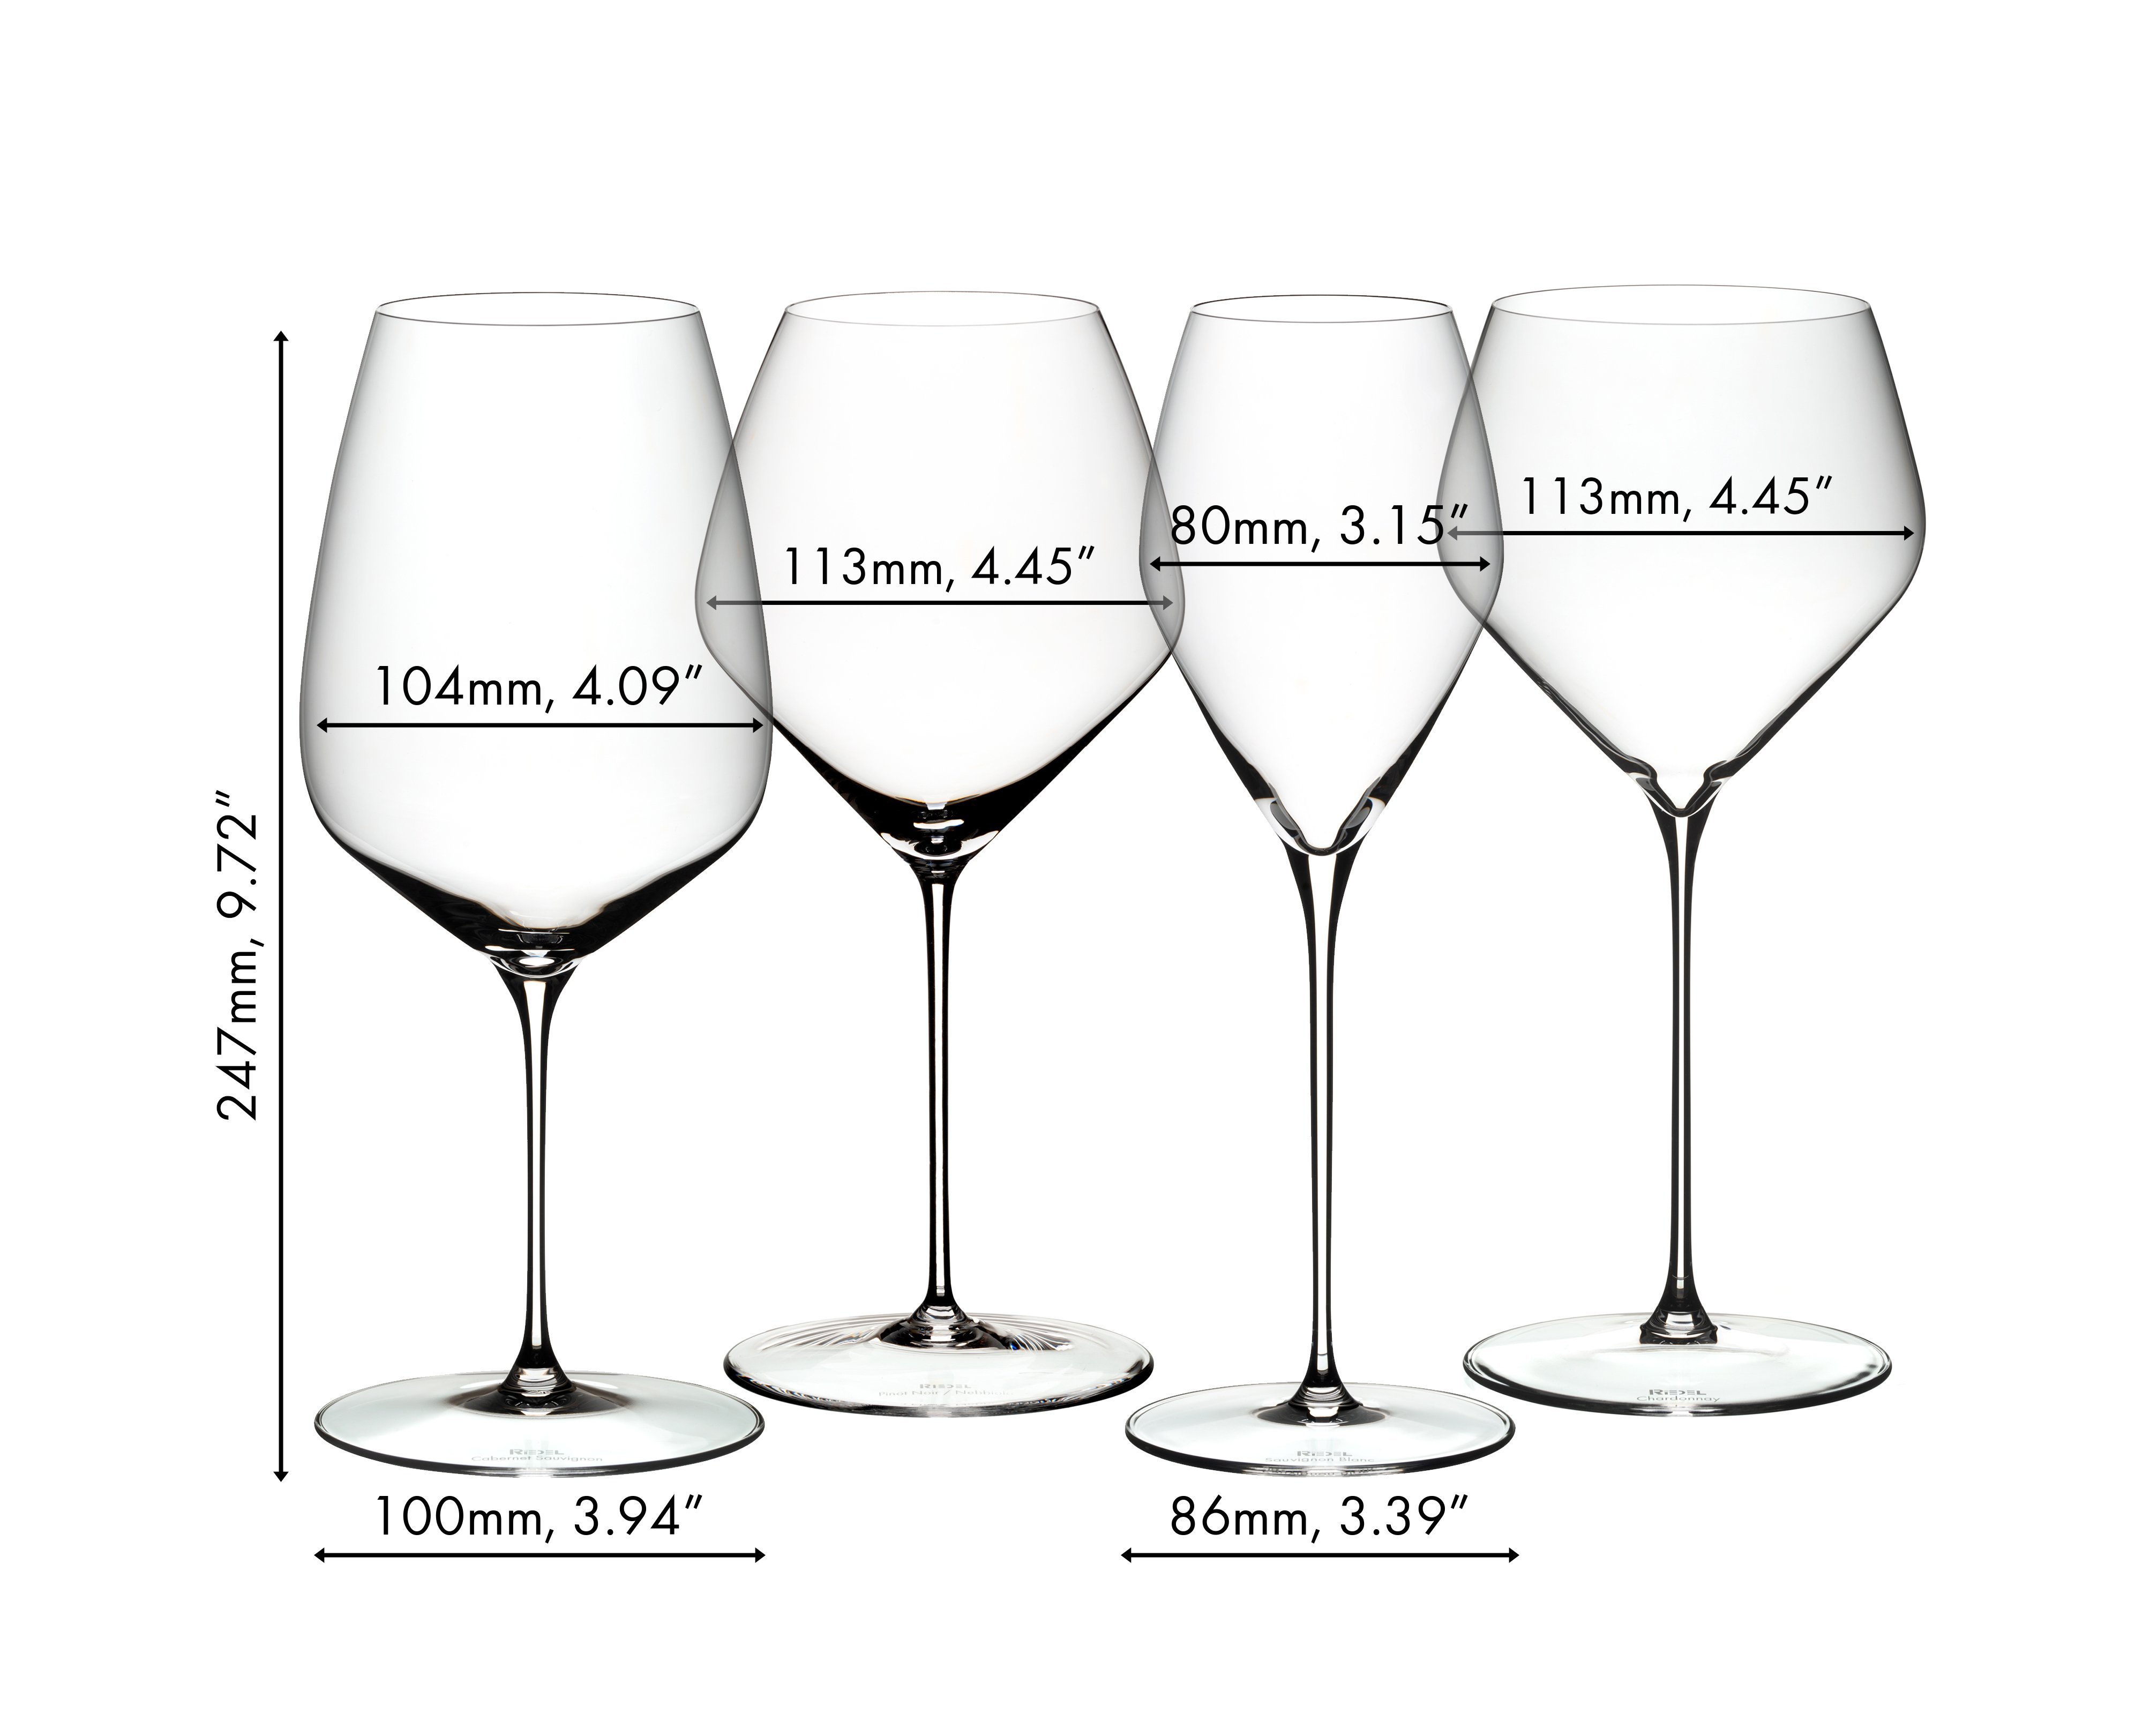 Riedel Veloce Riesling White Wine Glasses, Set of 2 - Worldshop